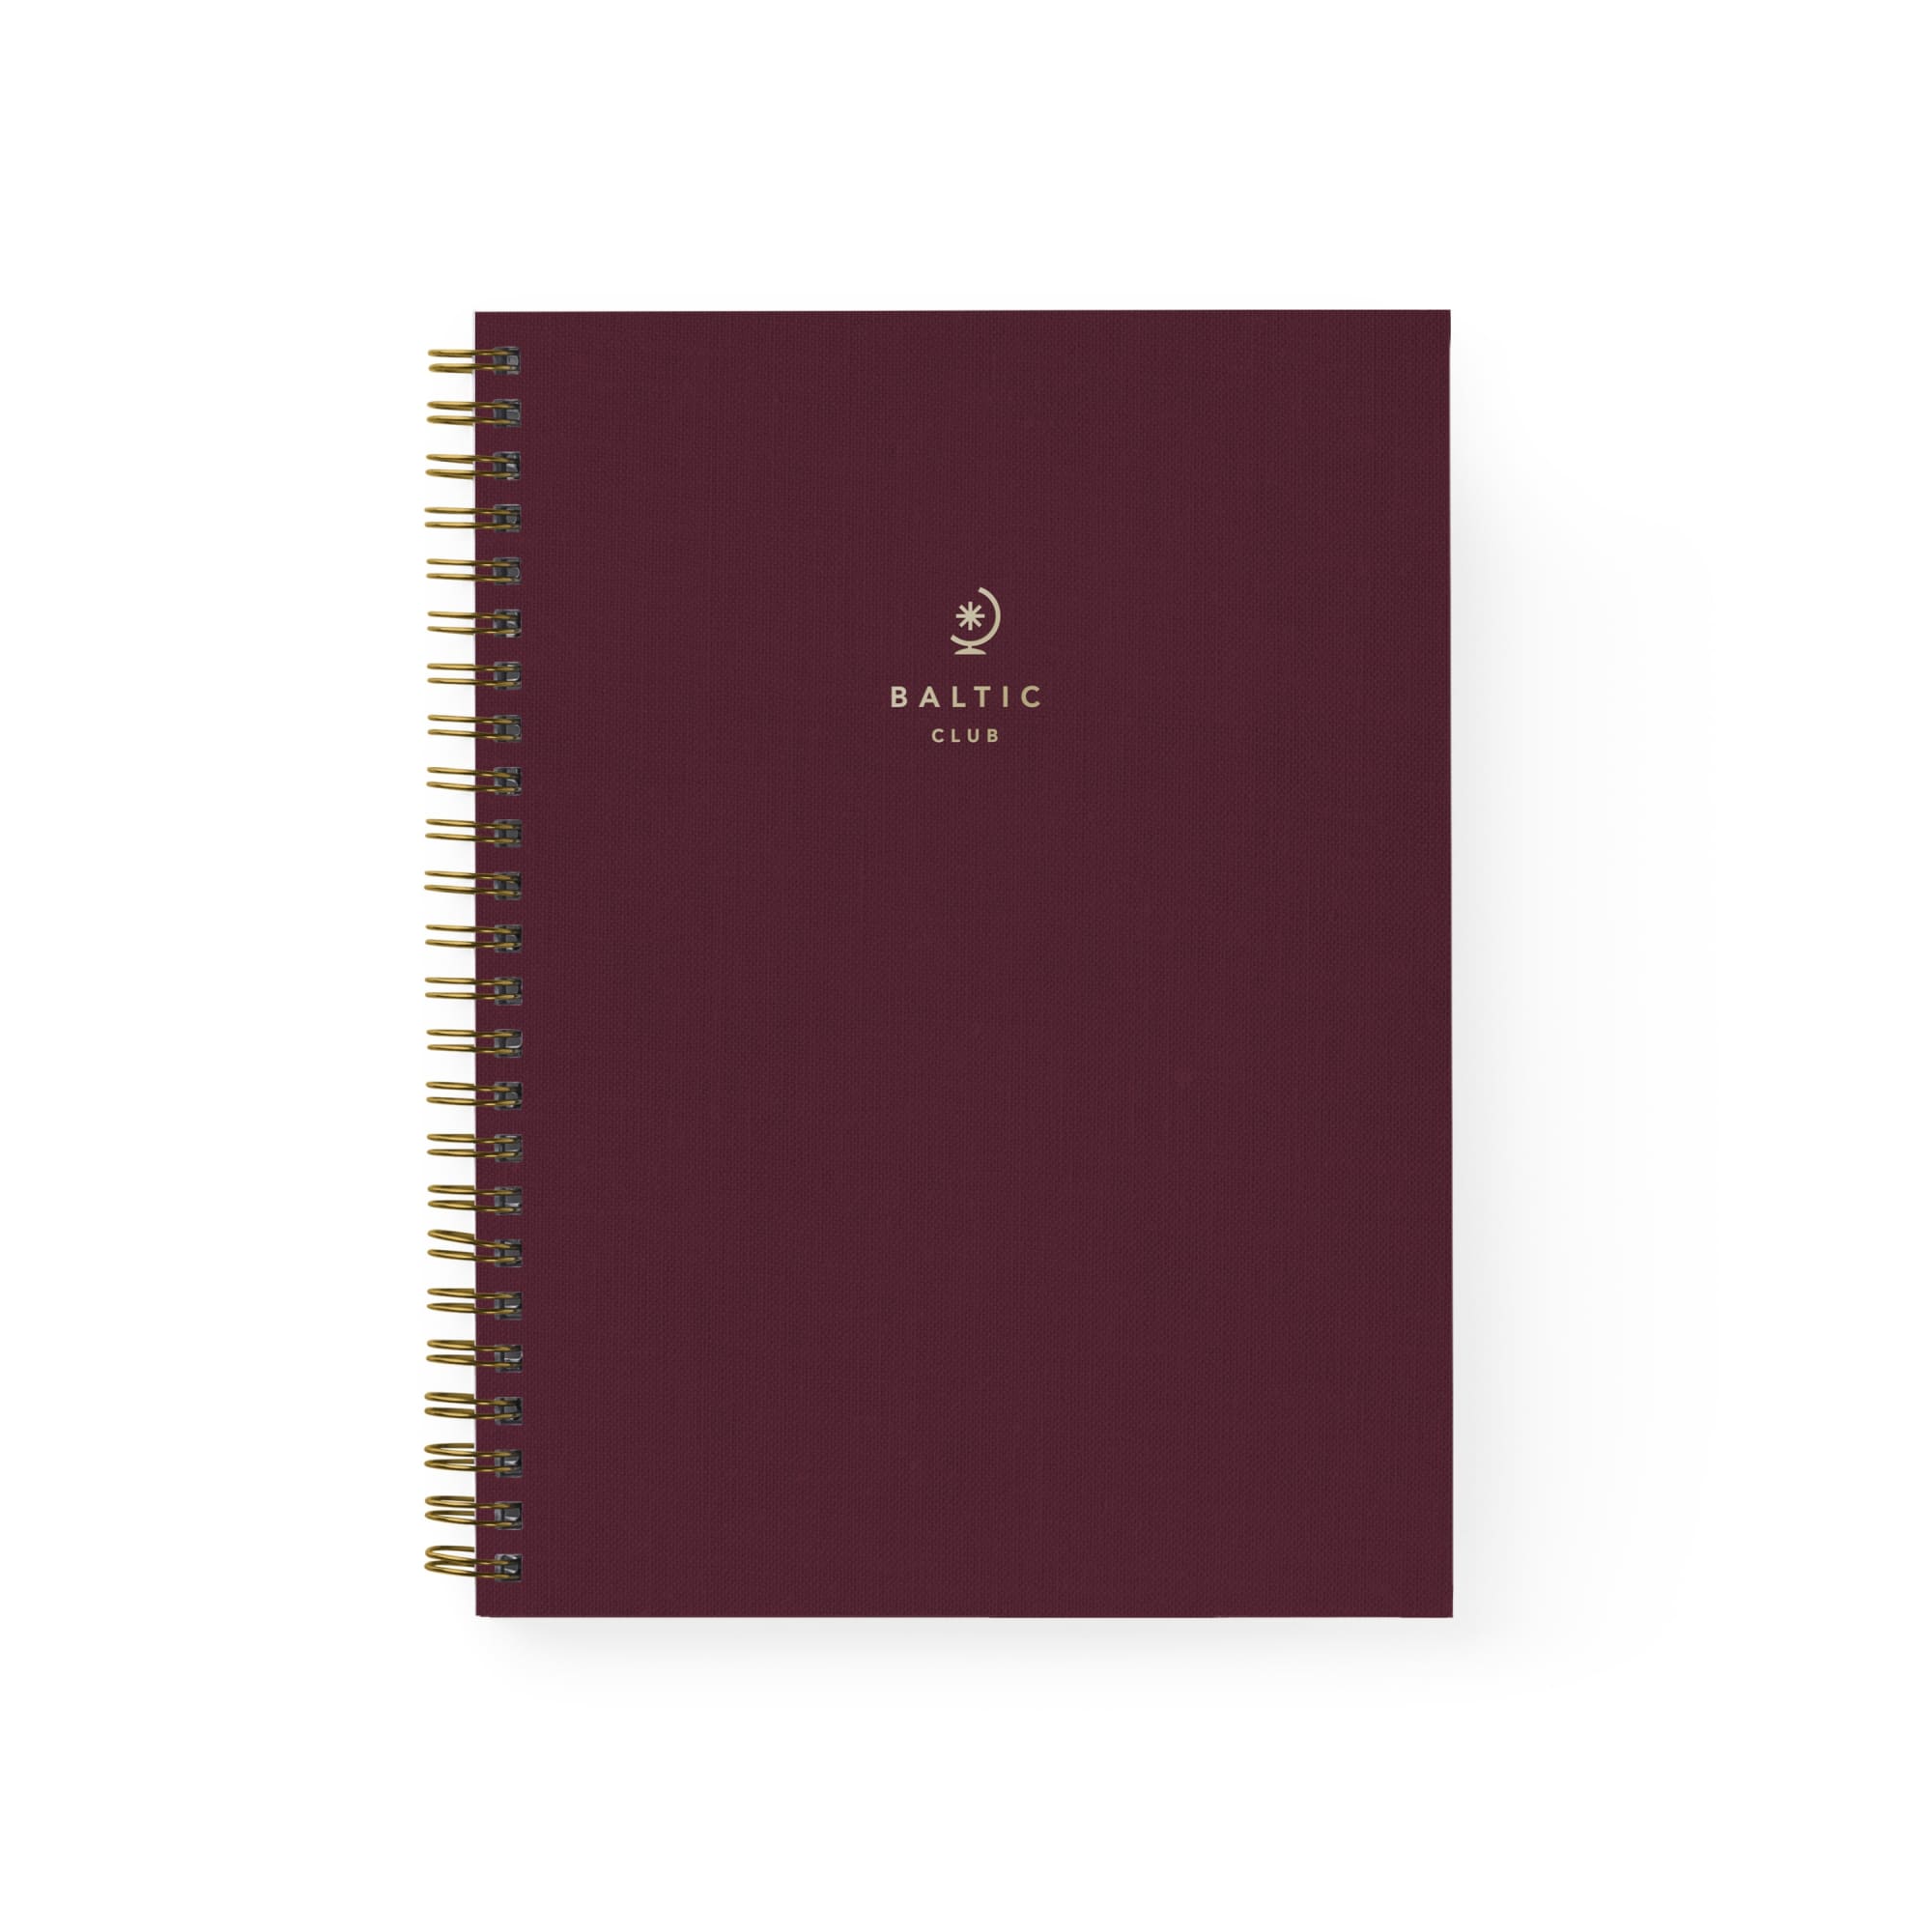 Burgundy Cloth Spiral Notebook | The Baltic Club